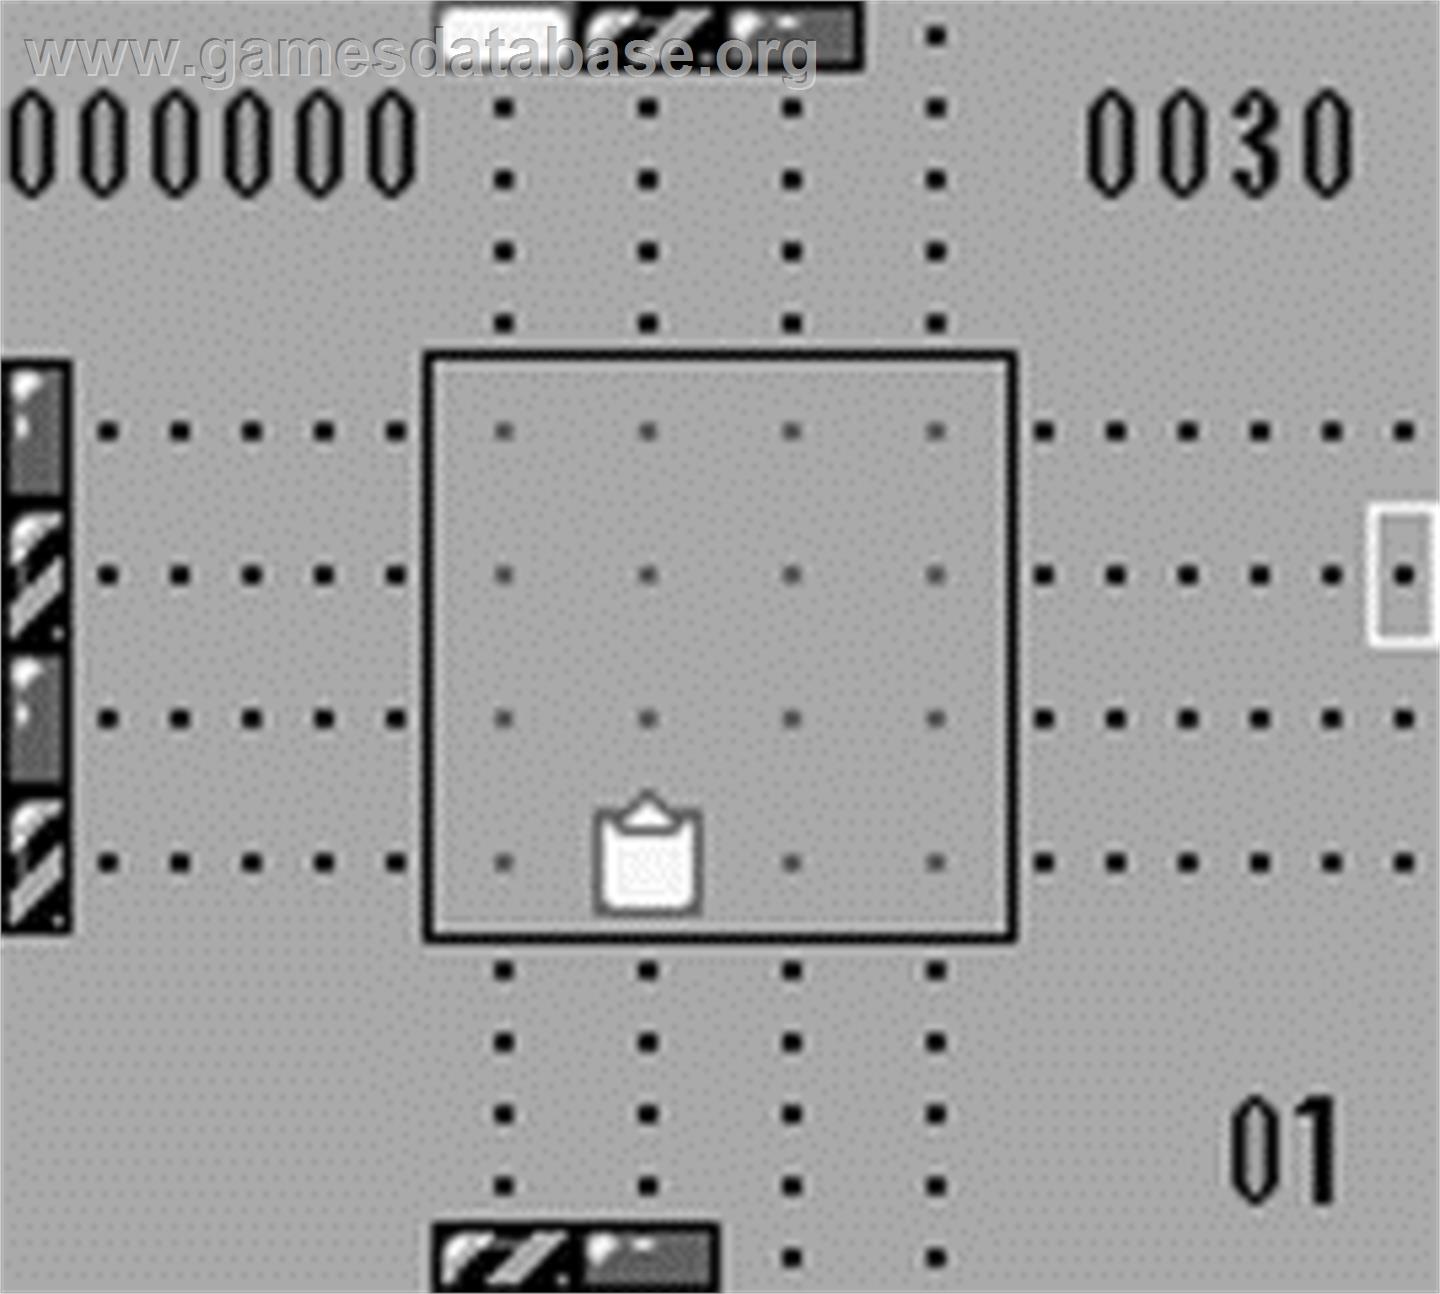 Zoop - Nintendo Game Boy - Artwork - In Game